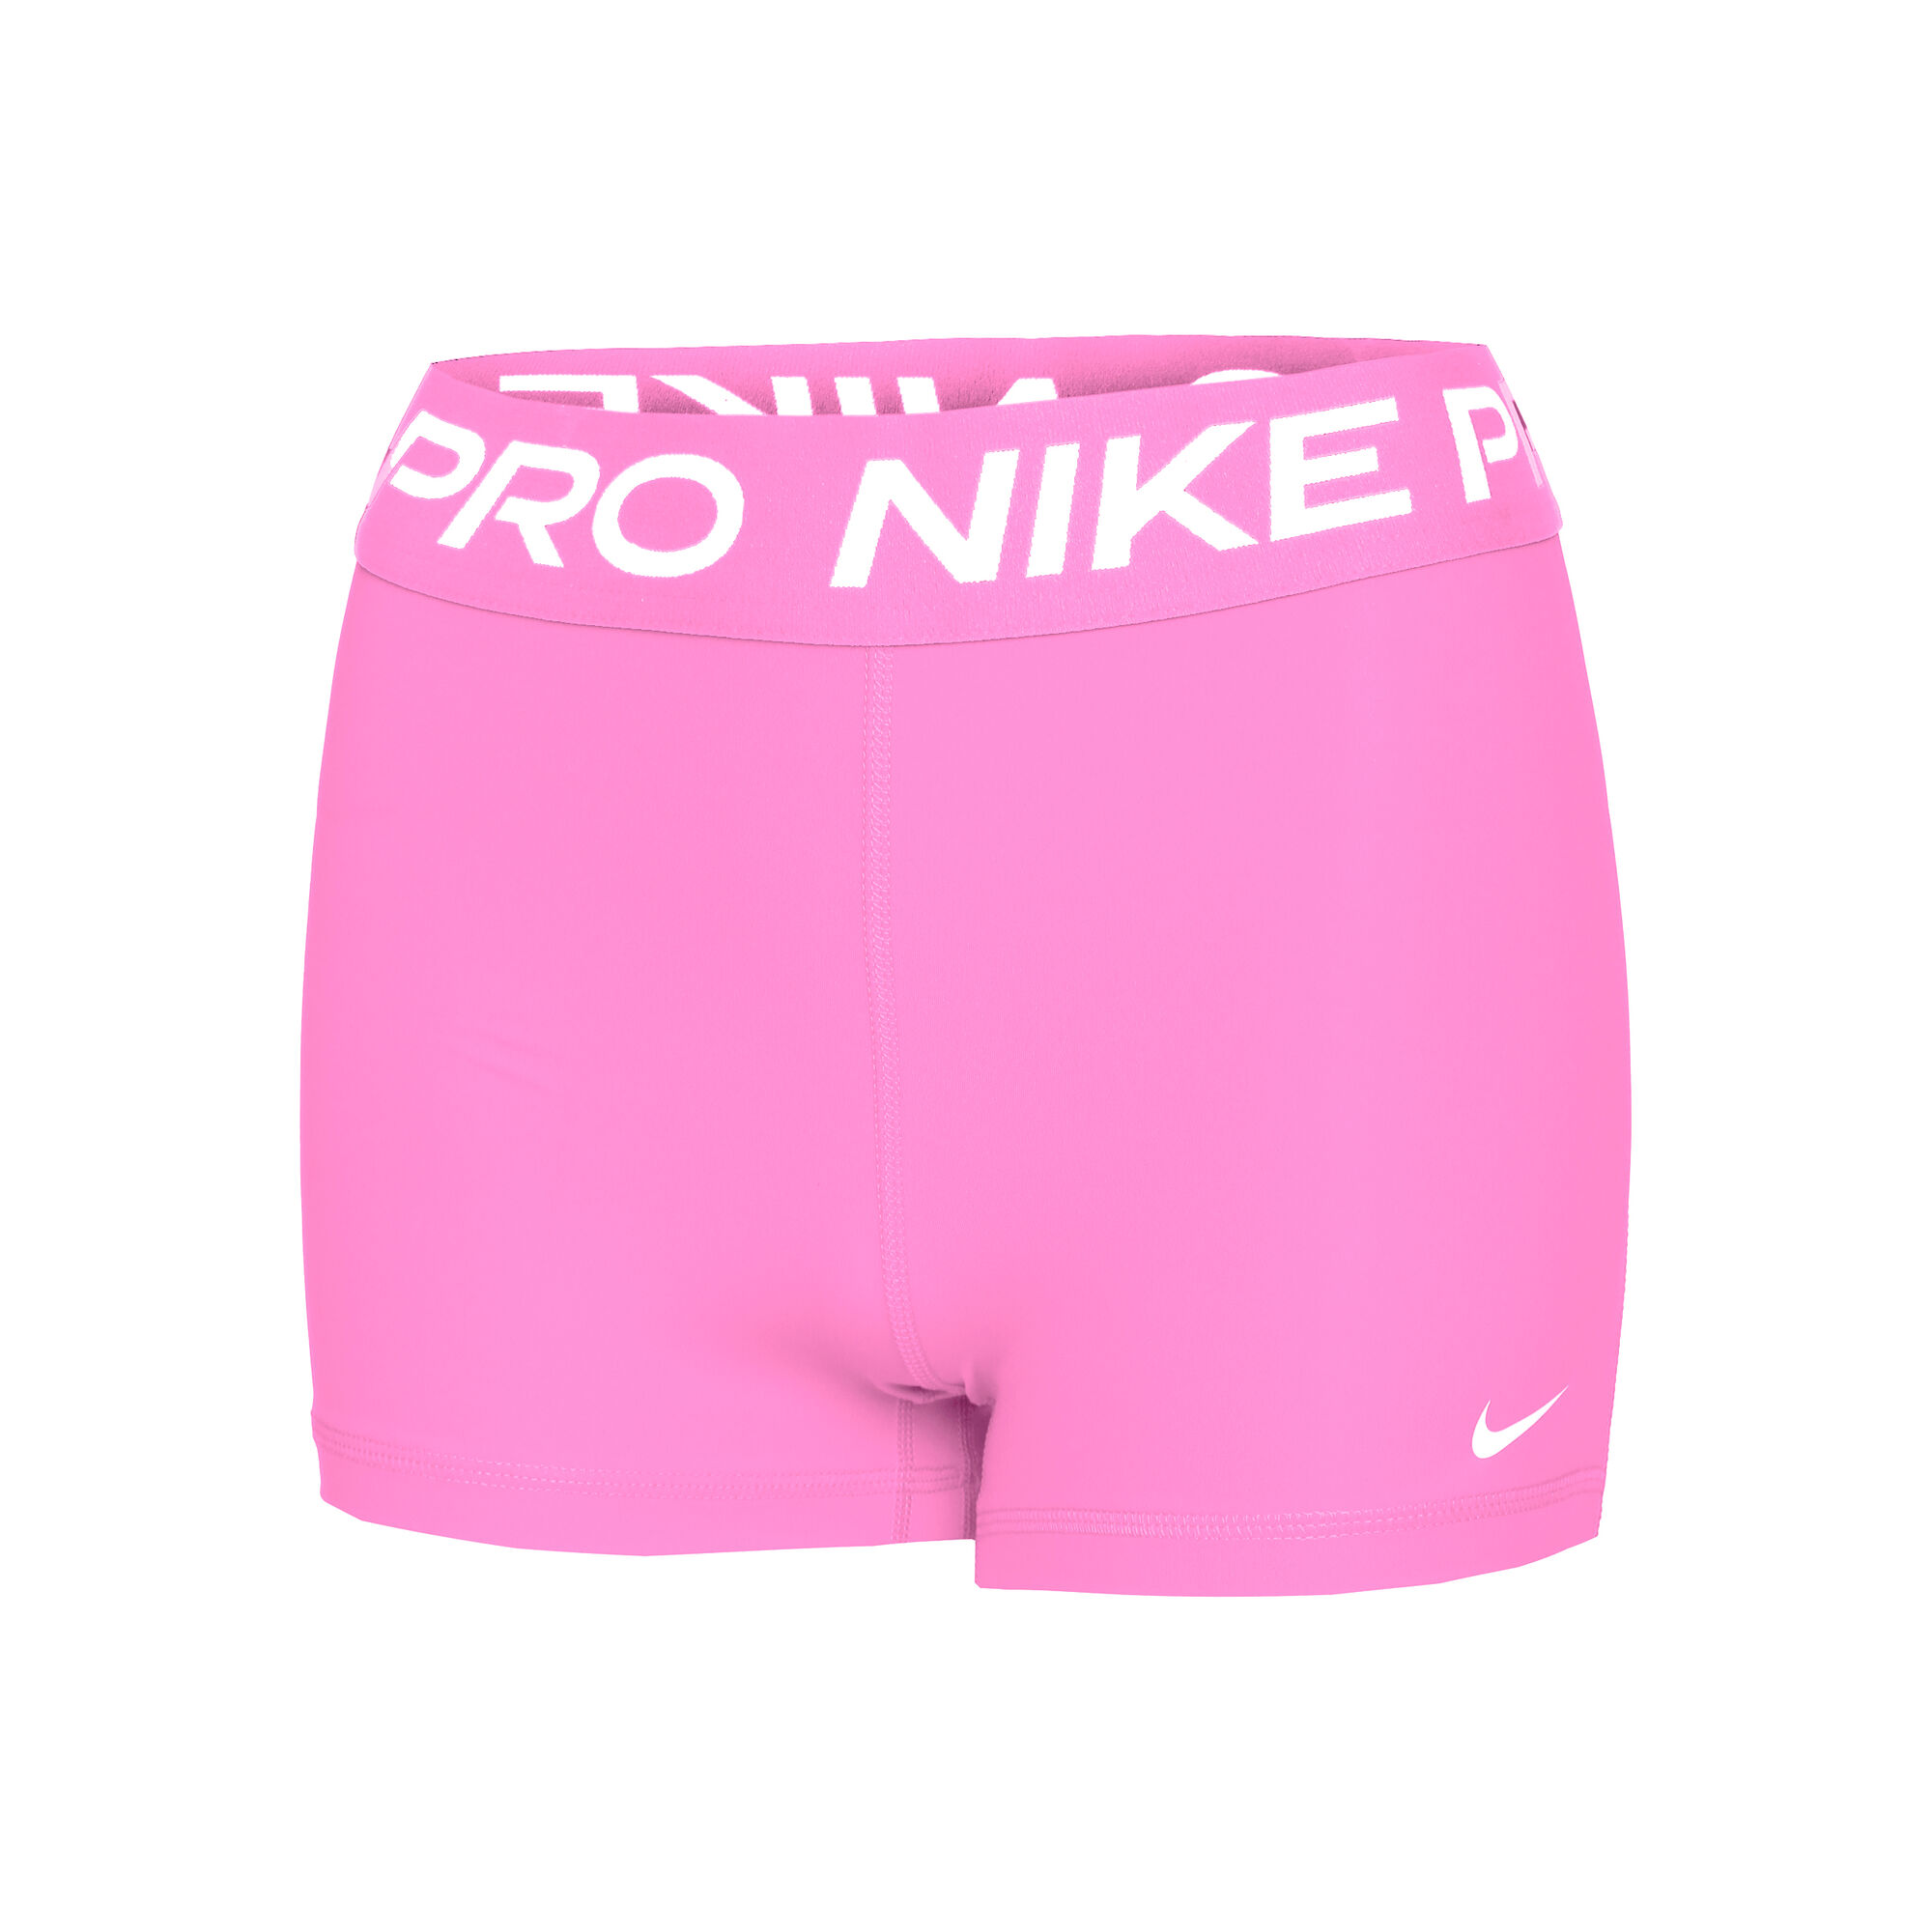 colorful nike pro shorts women